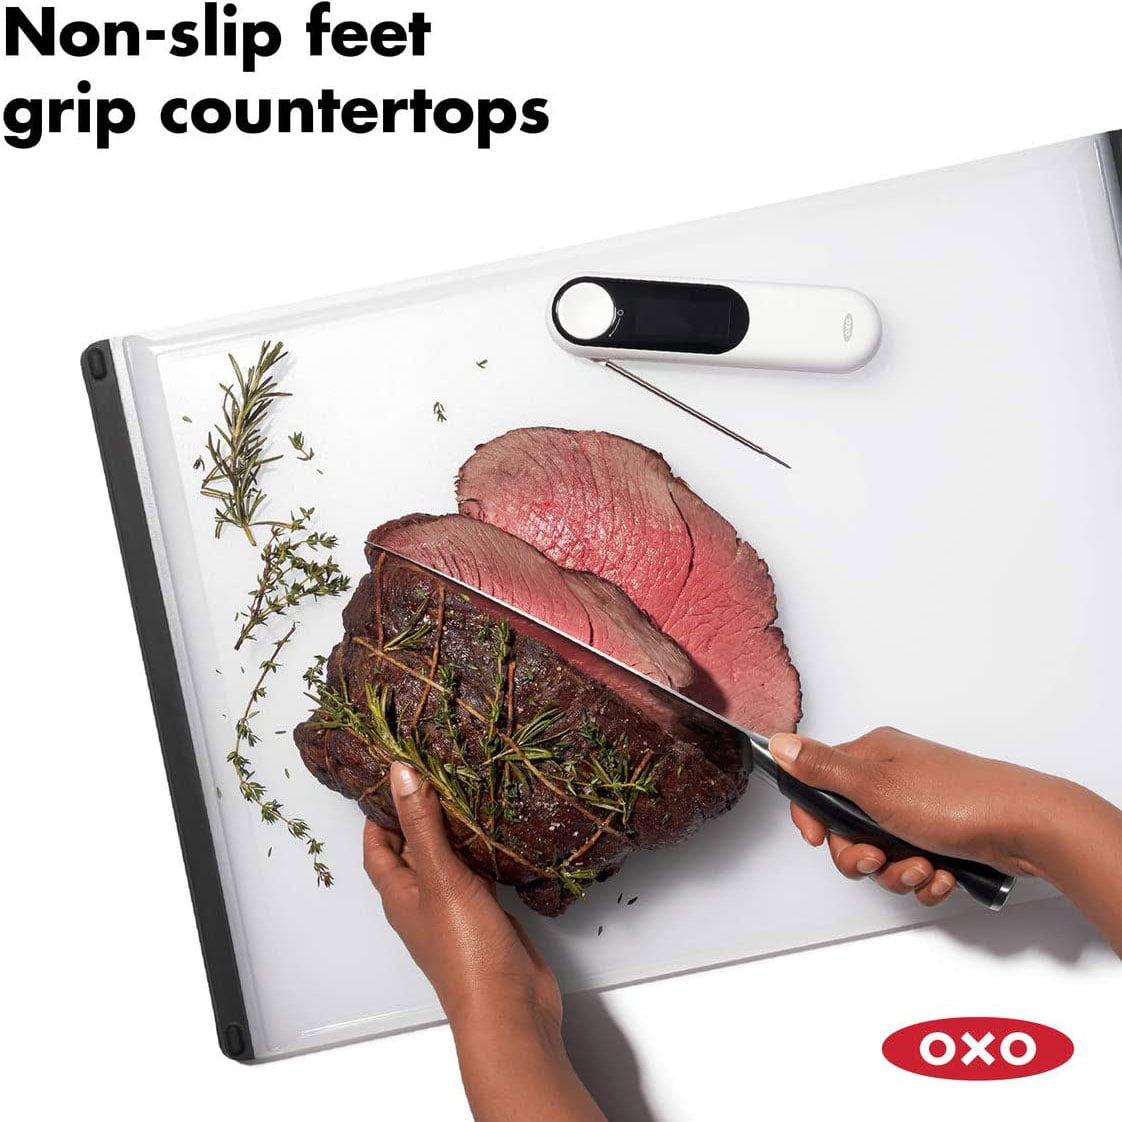 OXO Good Grips Utility Cutting Board